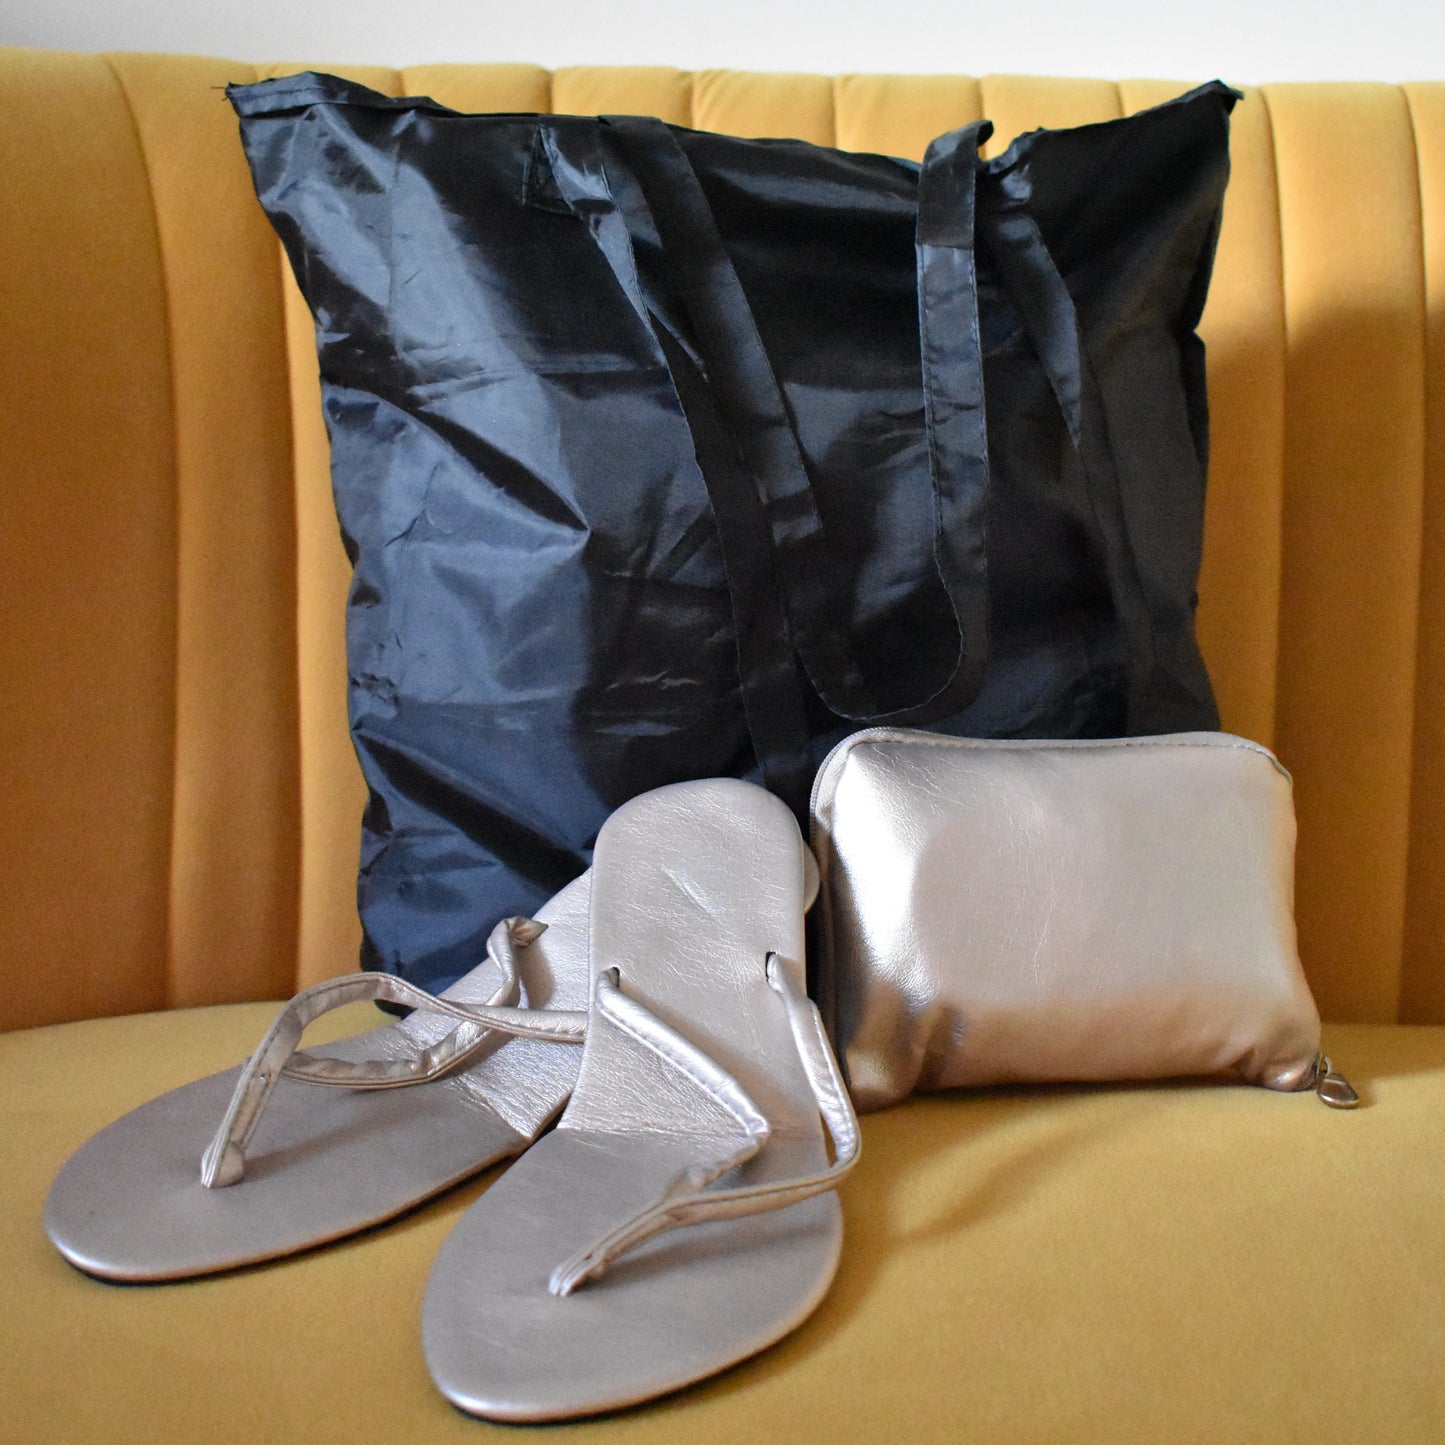 Foldable Flip Flops- Gold Women's Sandals